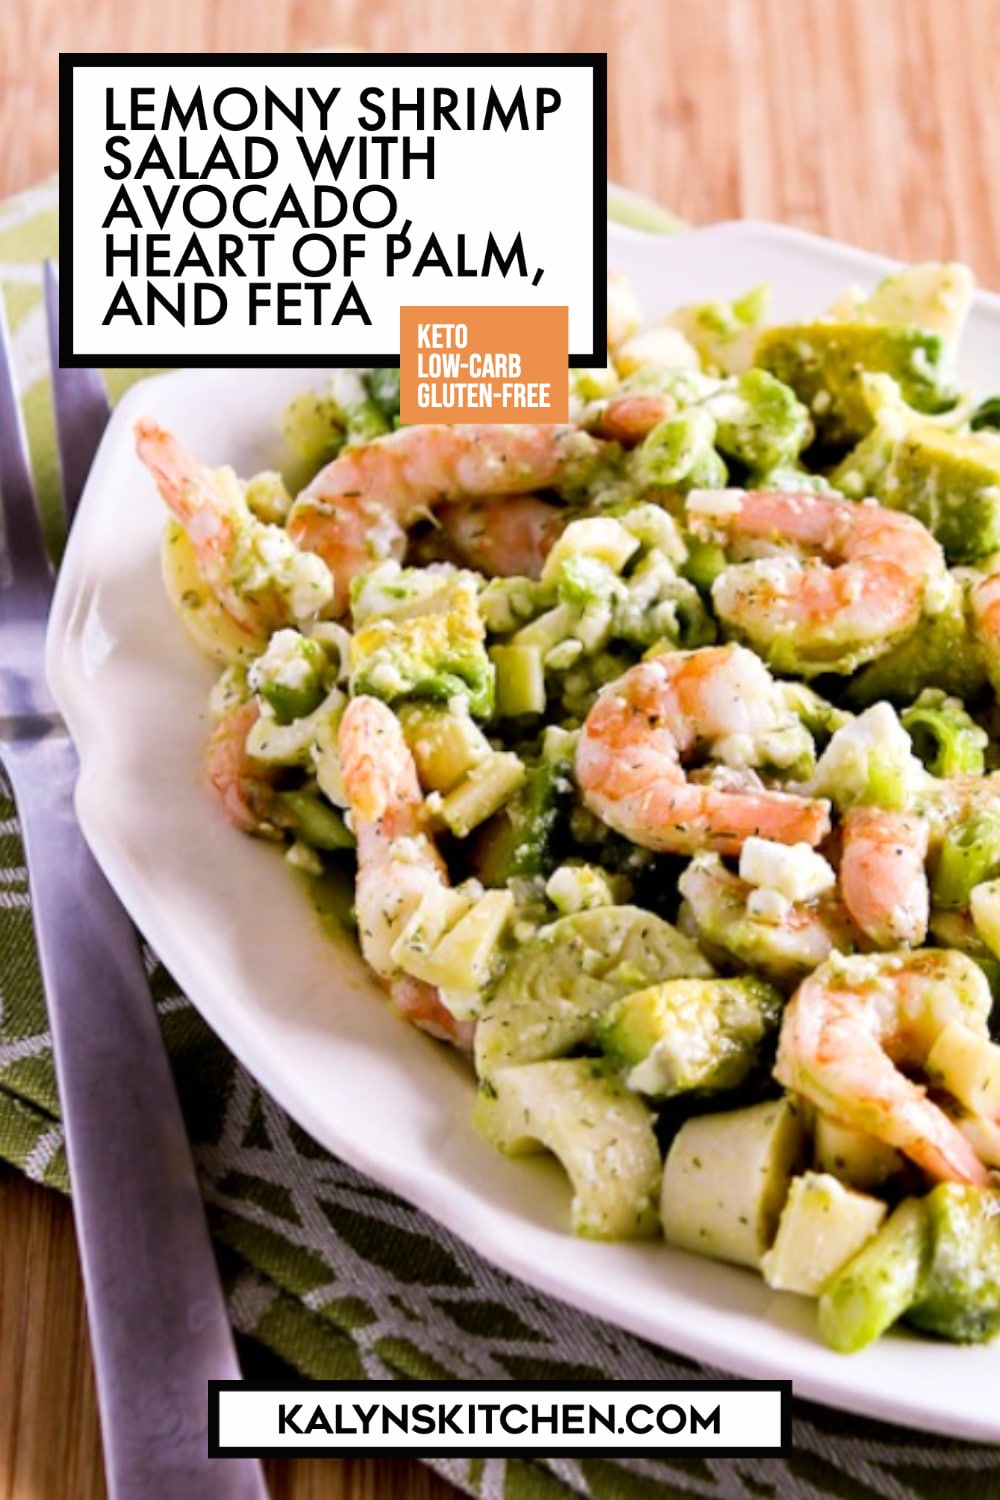 Pinterest image of Lemony Shrimp Salad with Avocado, Heart of Palm, and Feta